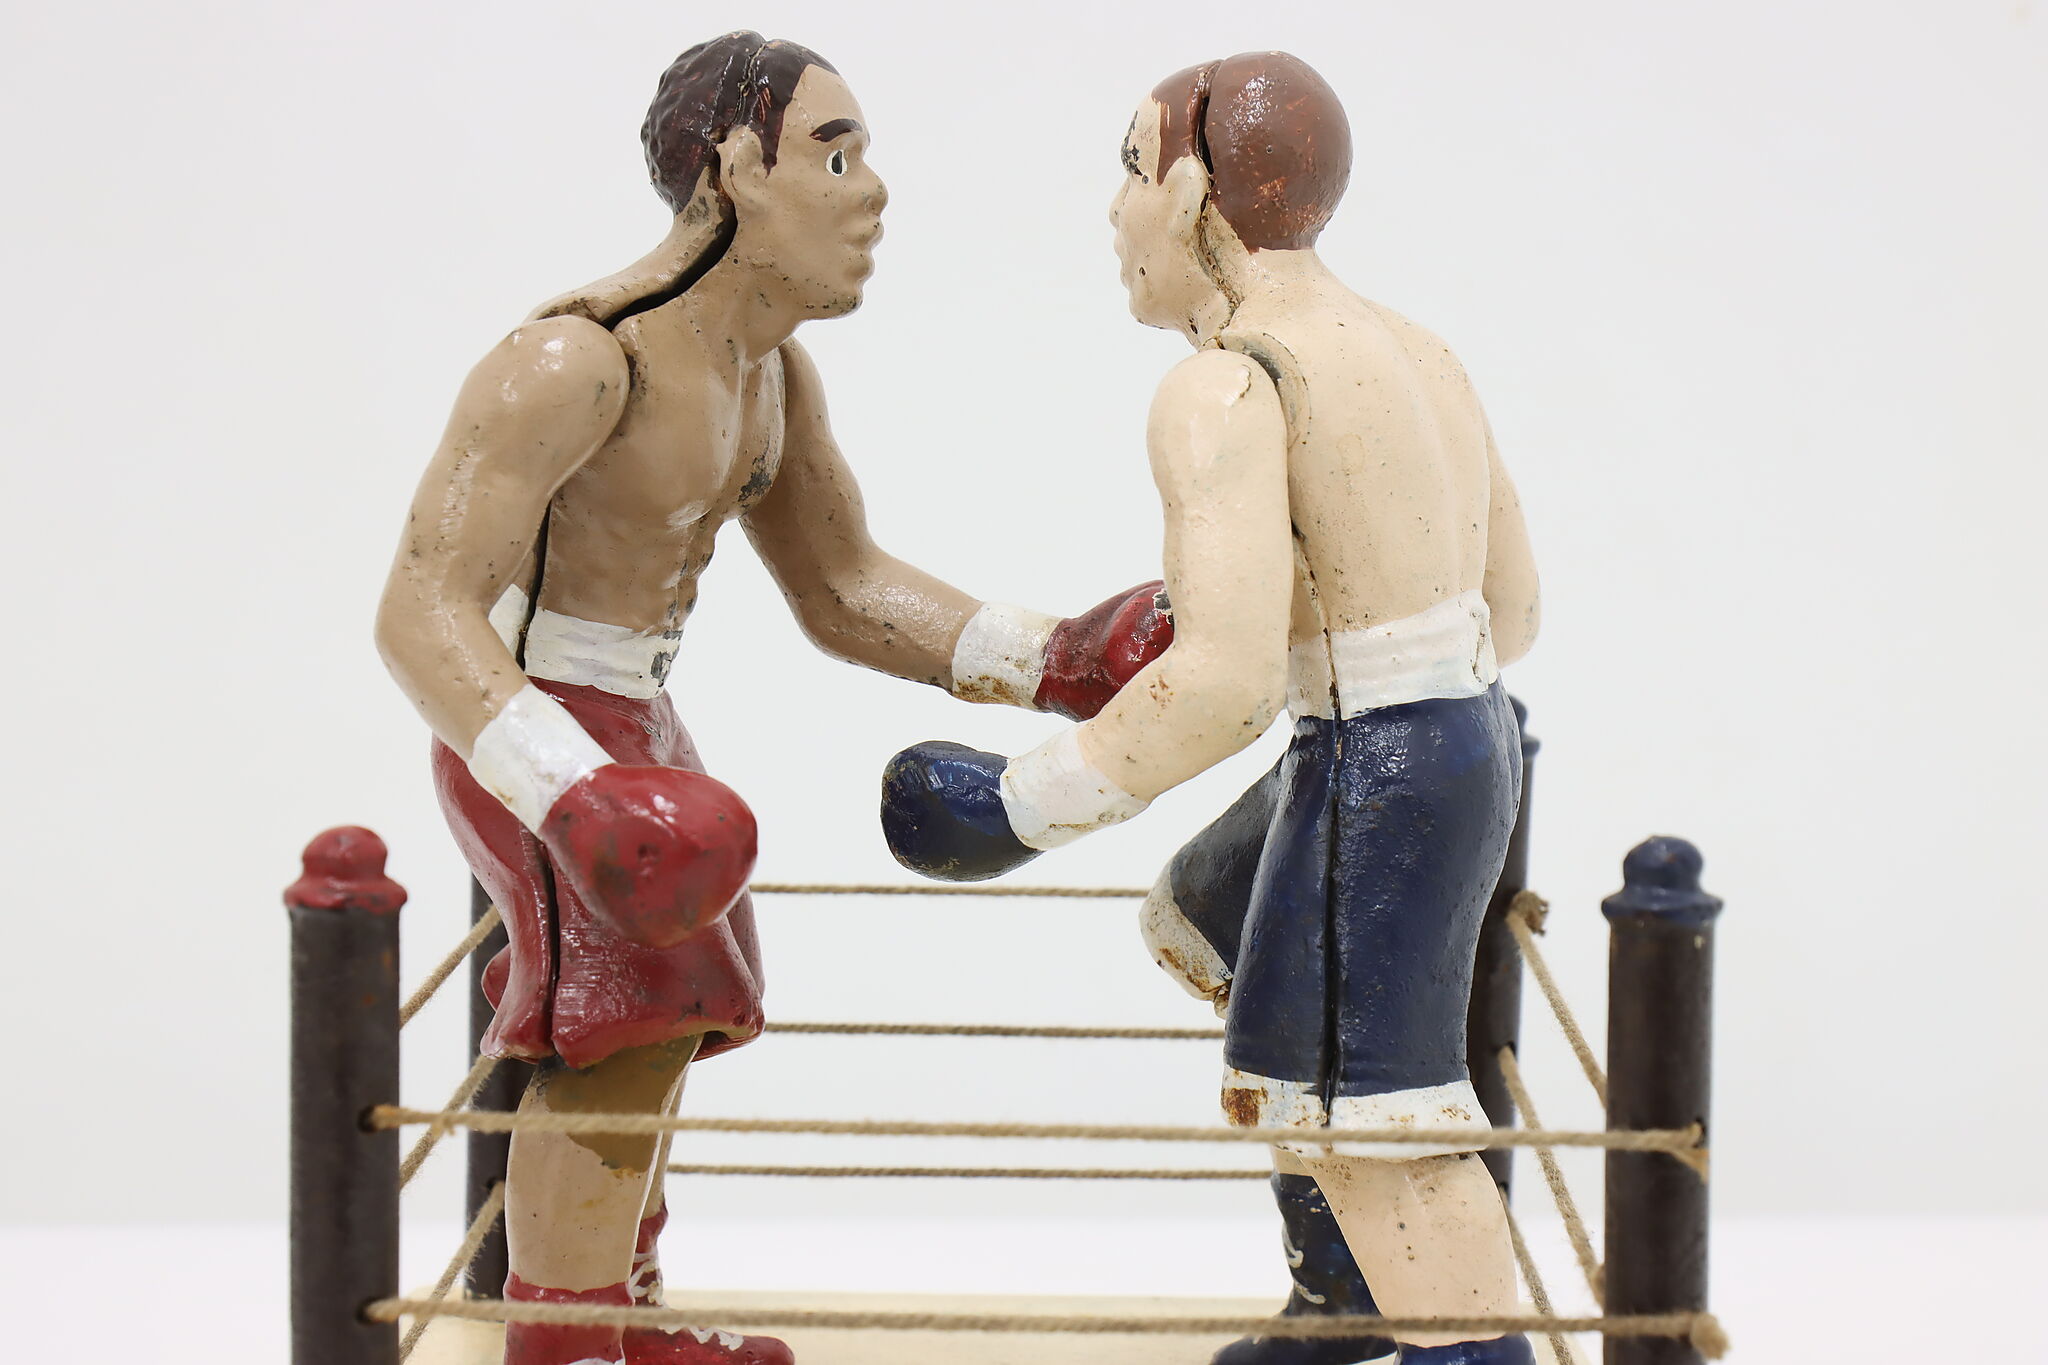 Joe Louis Autographed Mini Boxing gloves (collectible)